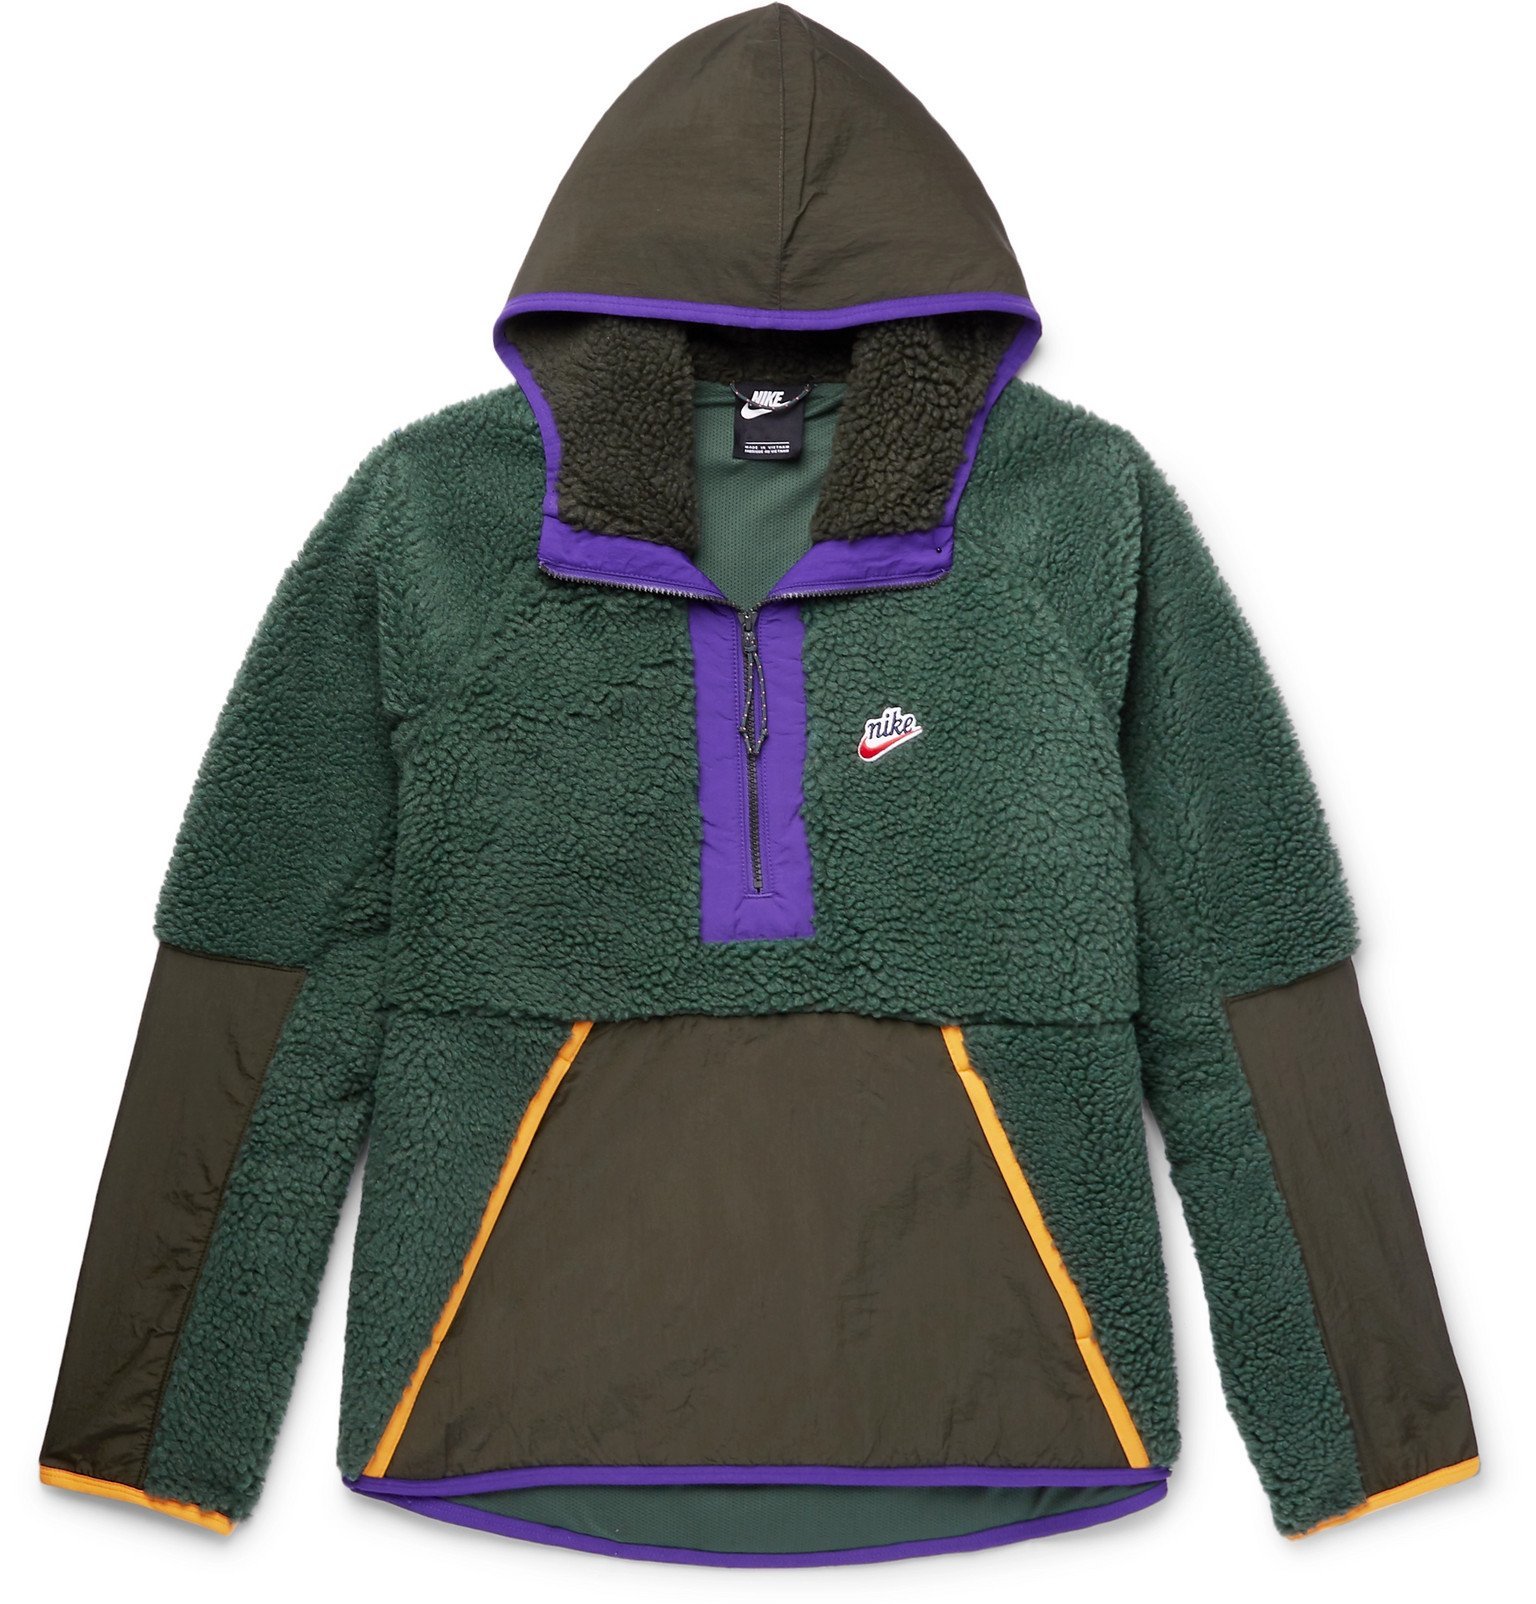 green and purple nike jacket